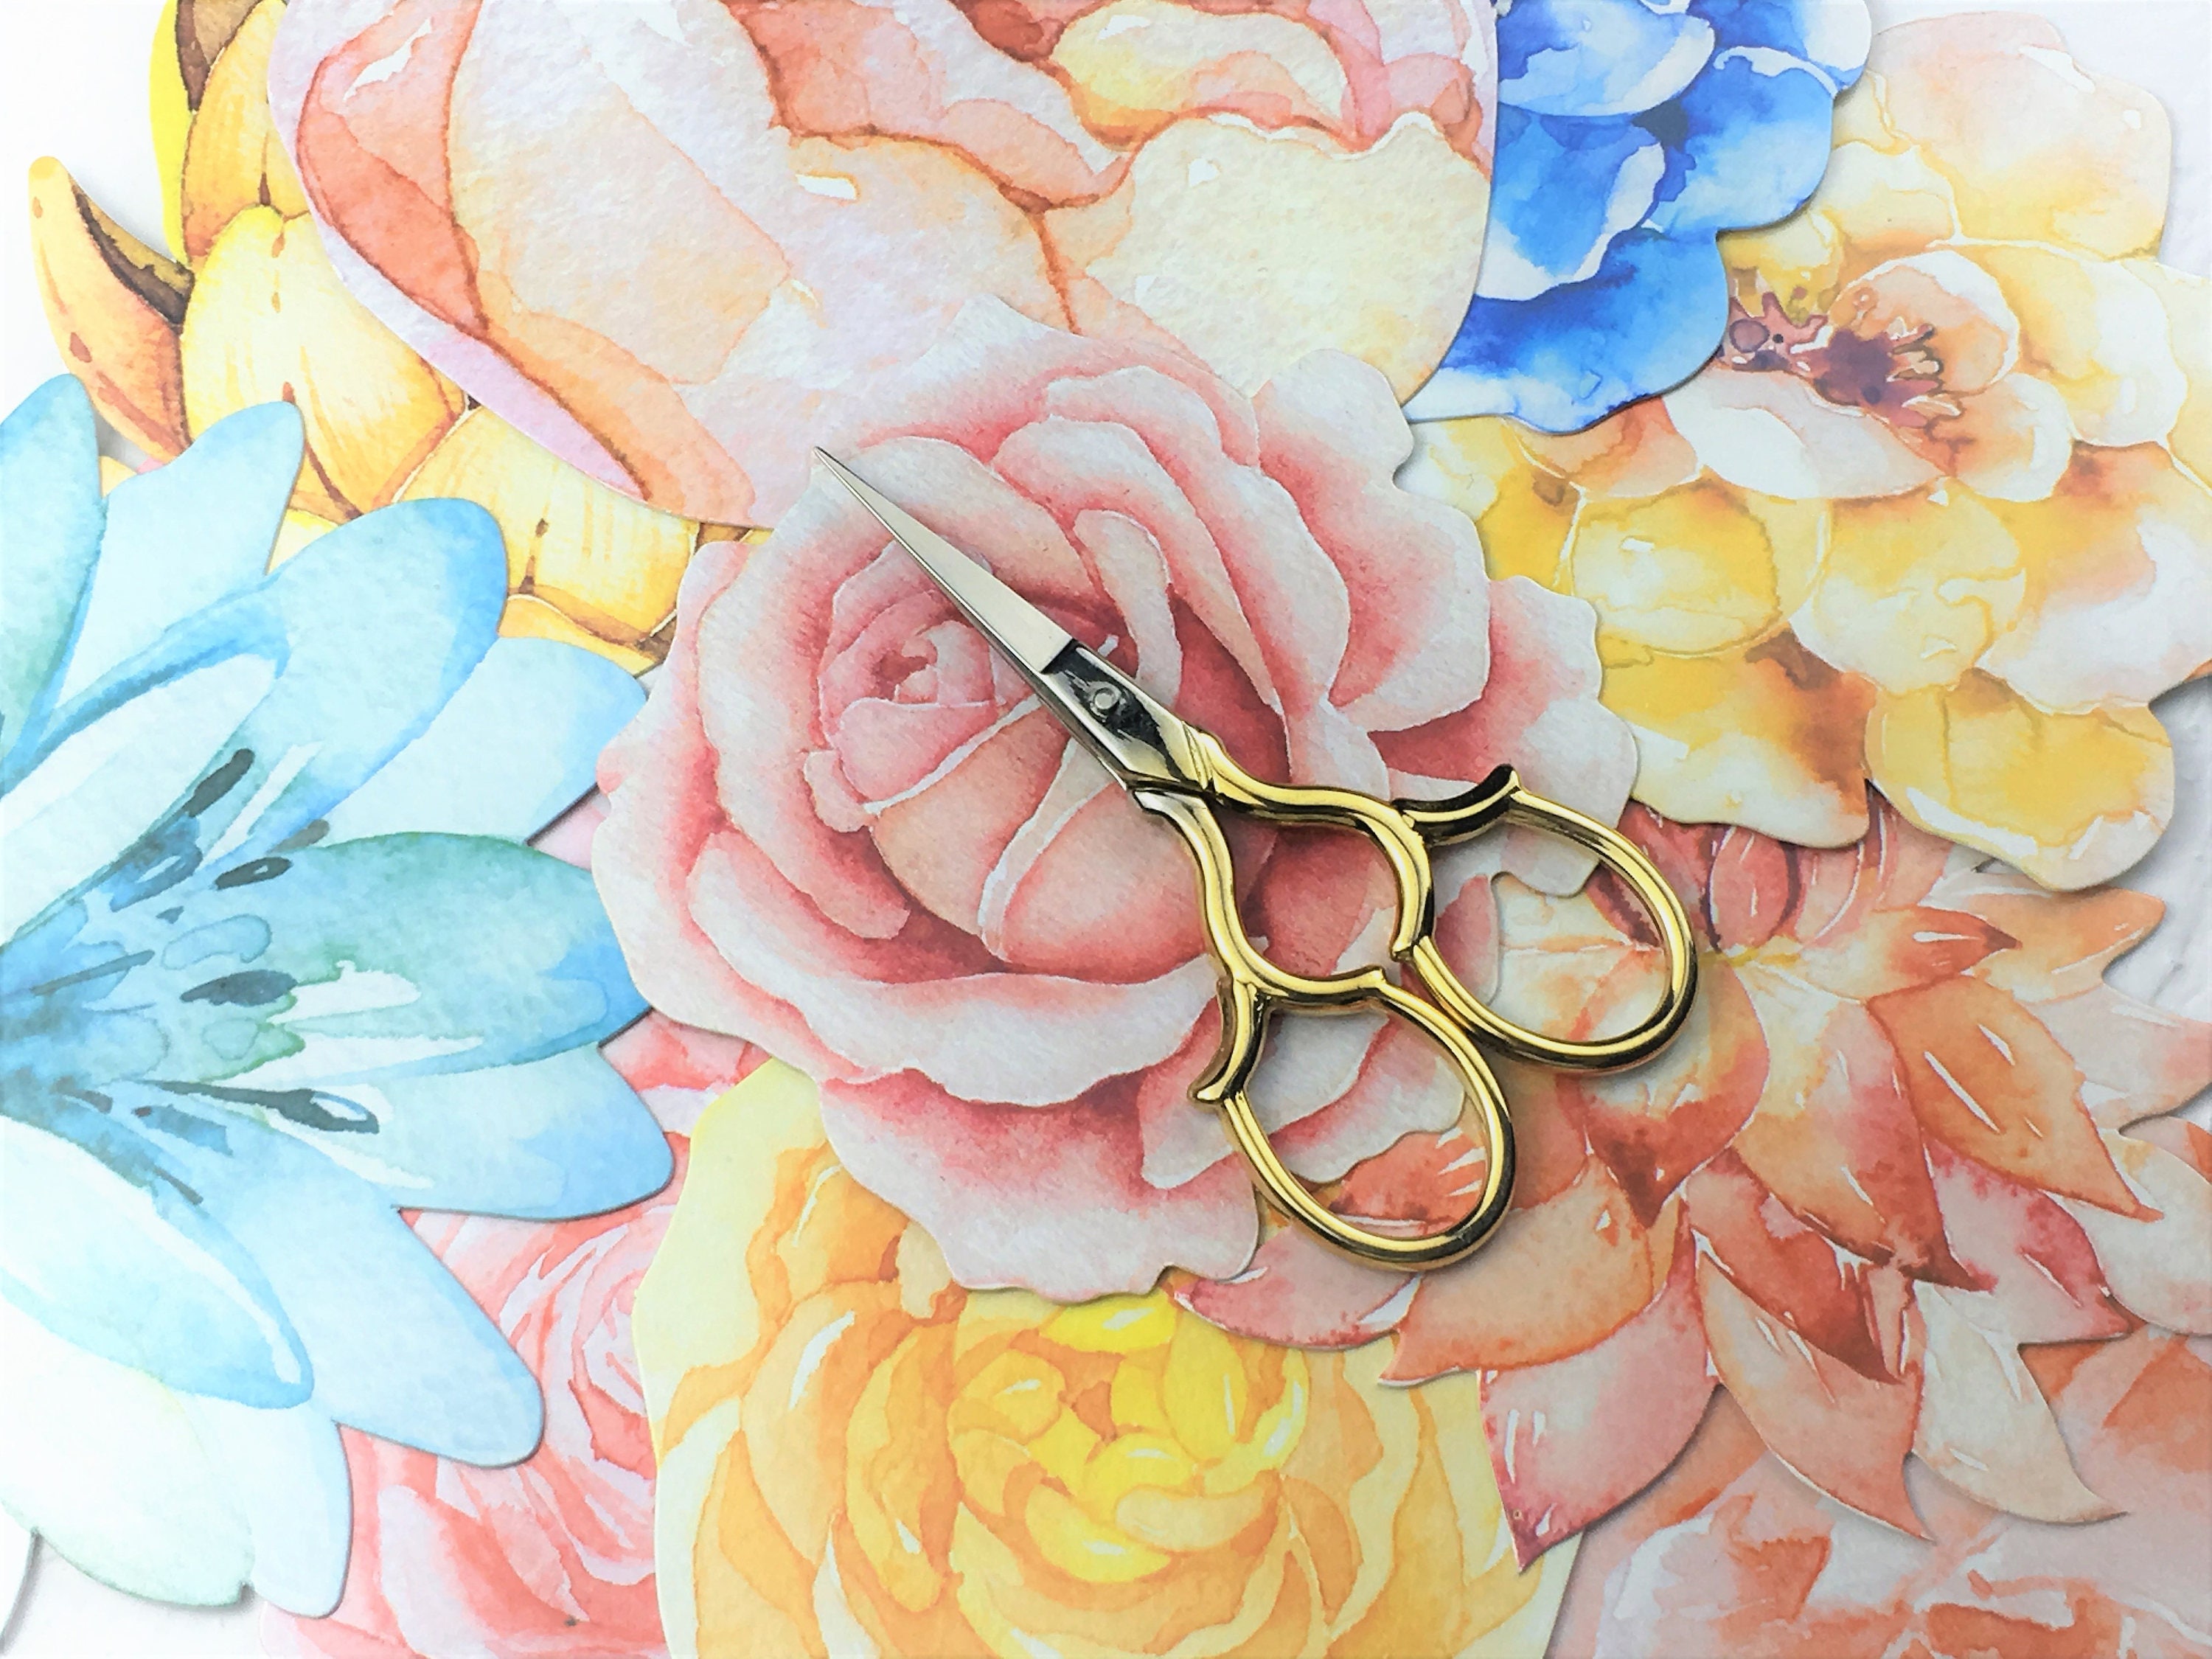 Mgaxyff Retro Scissor Vintage Embroidery DIY Hand Made Cross stitch Craft  Sewing Accessories(Rose Gold ) 